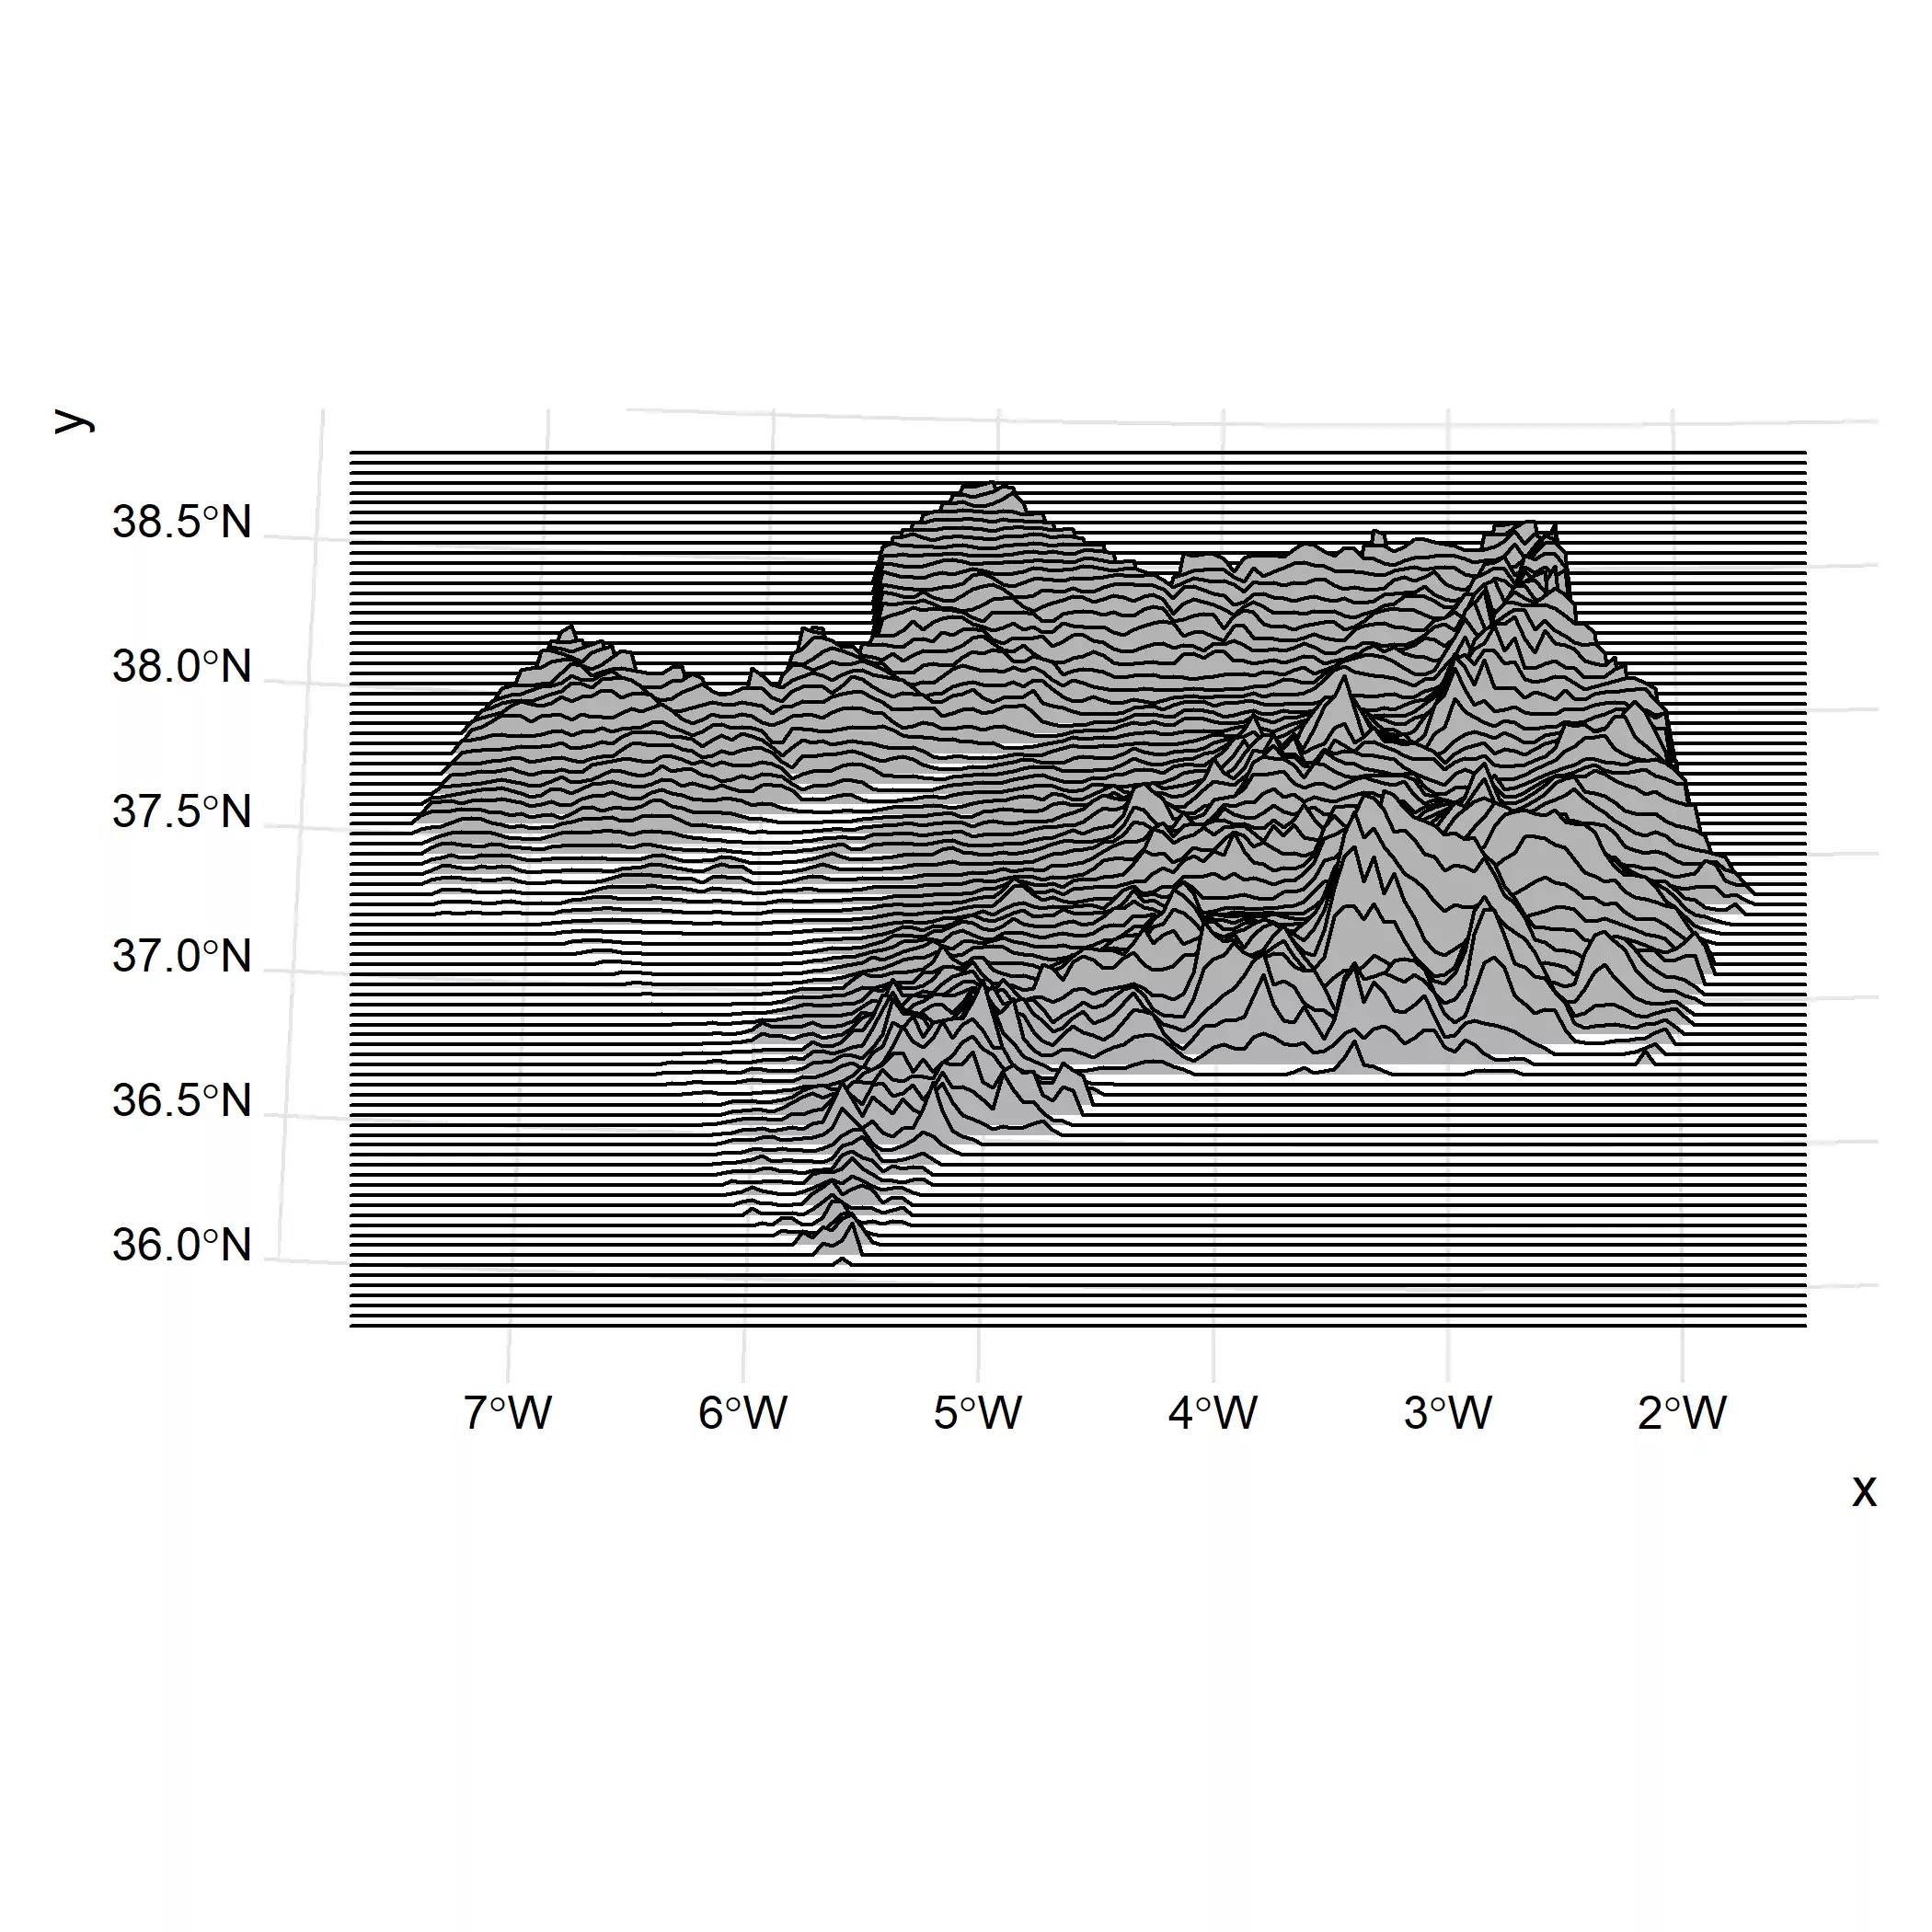 plot of chunk 20220501_andalucia_ridges